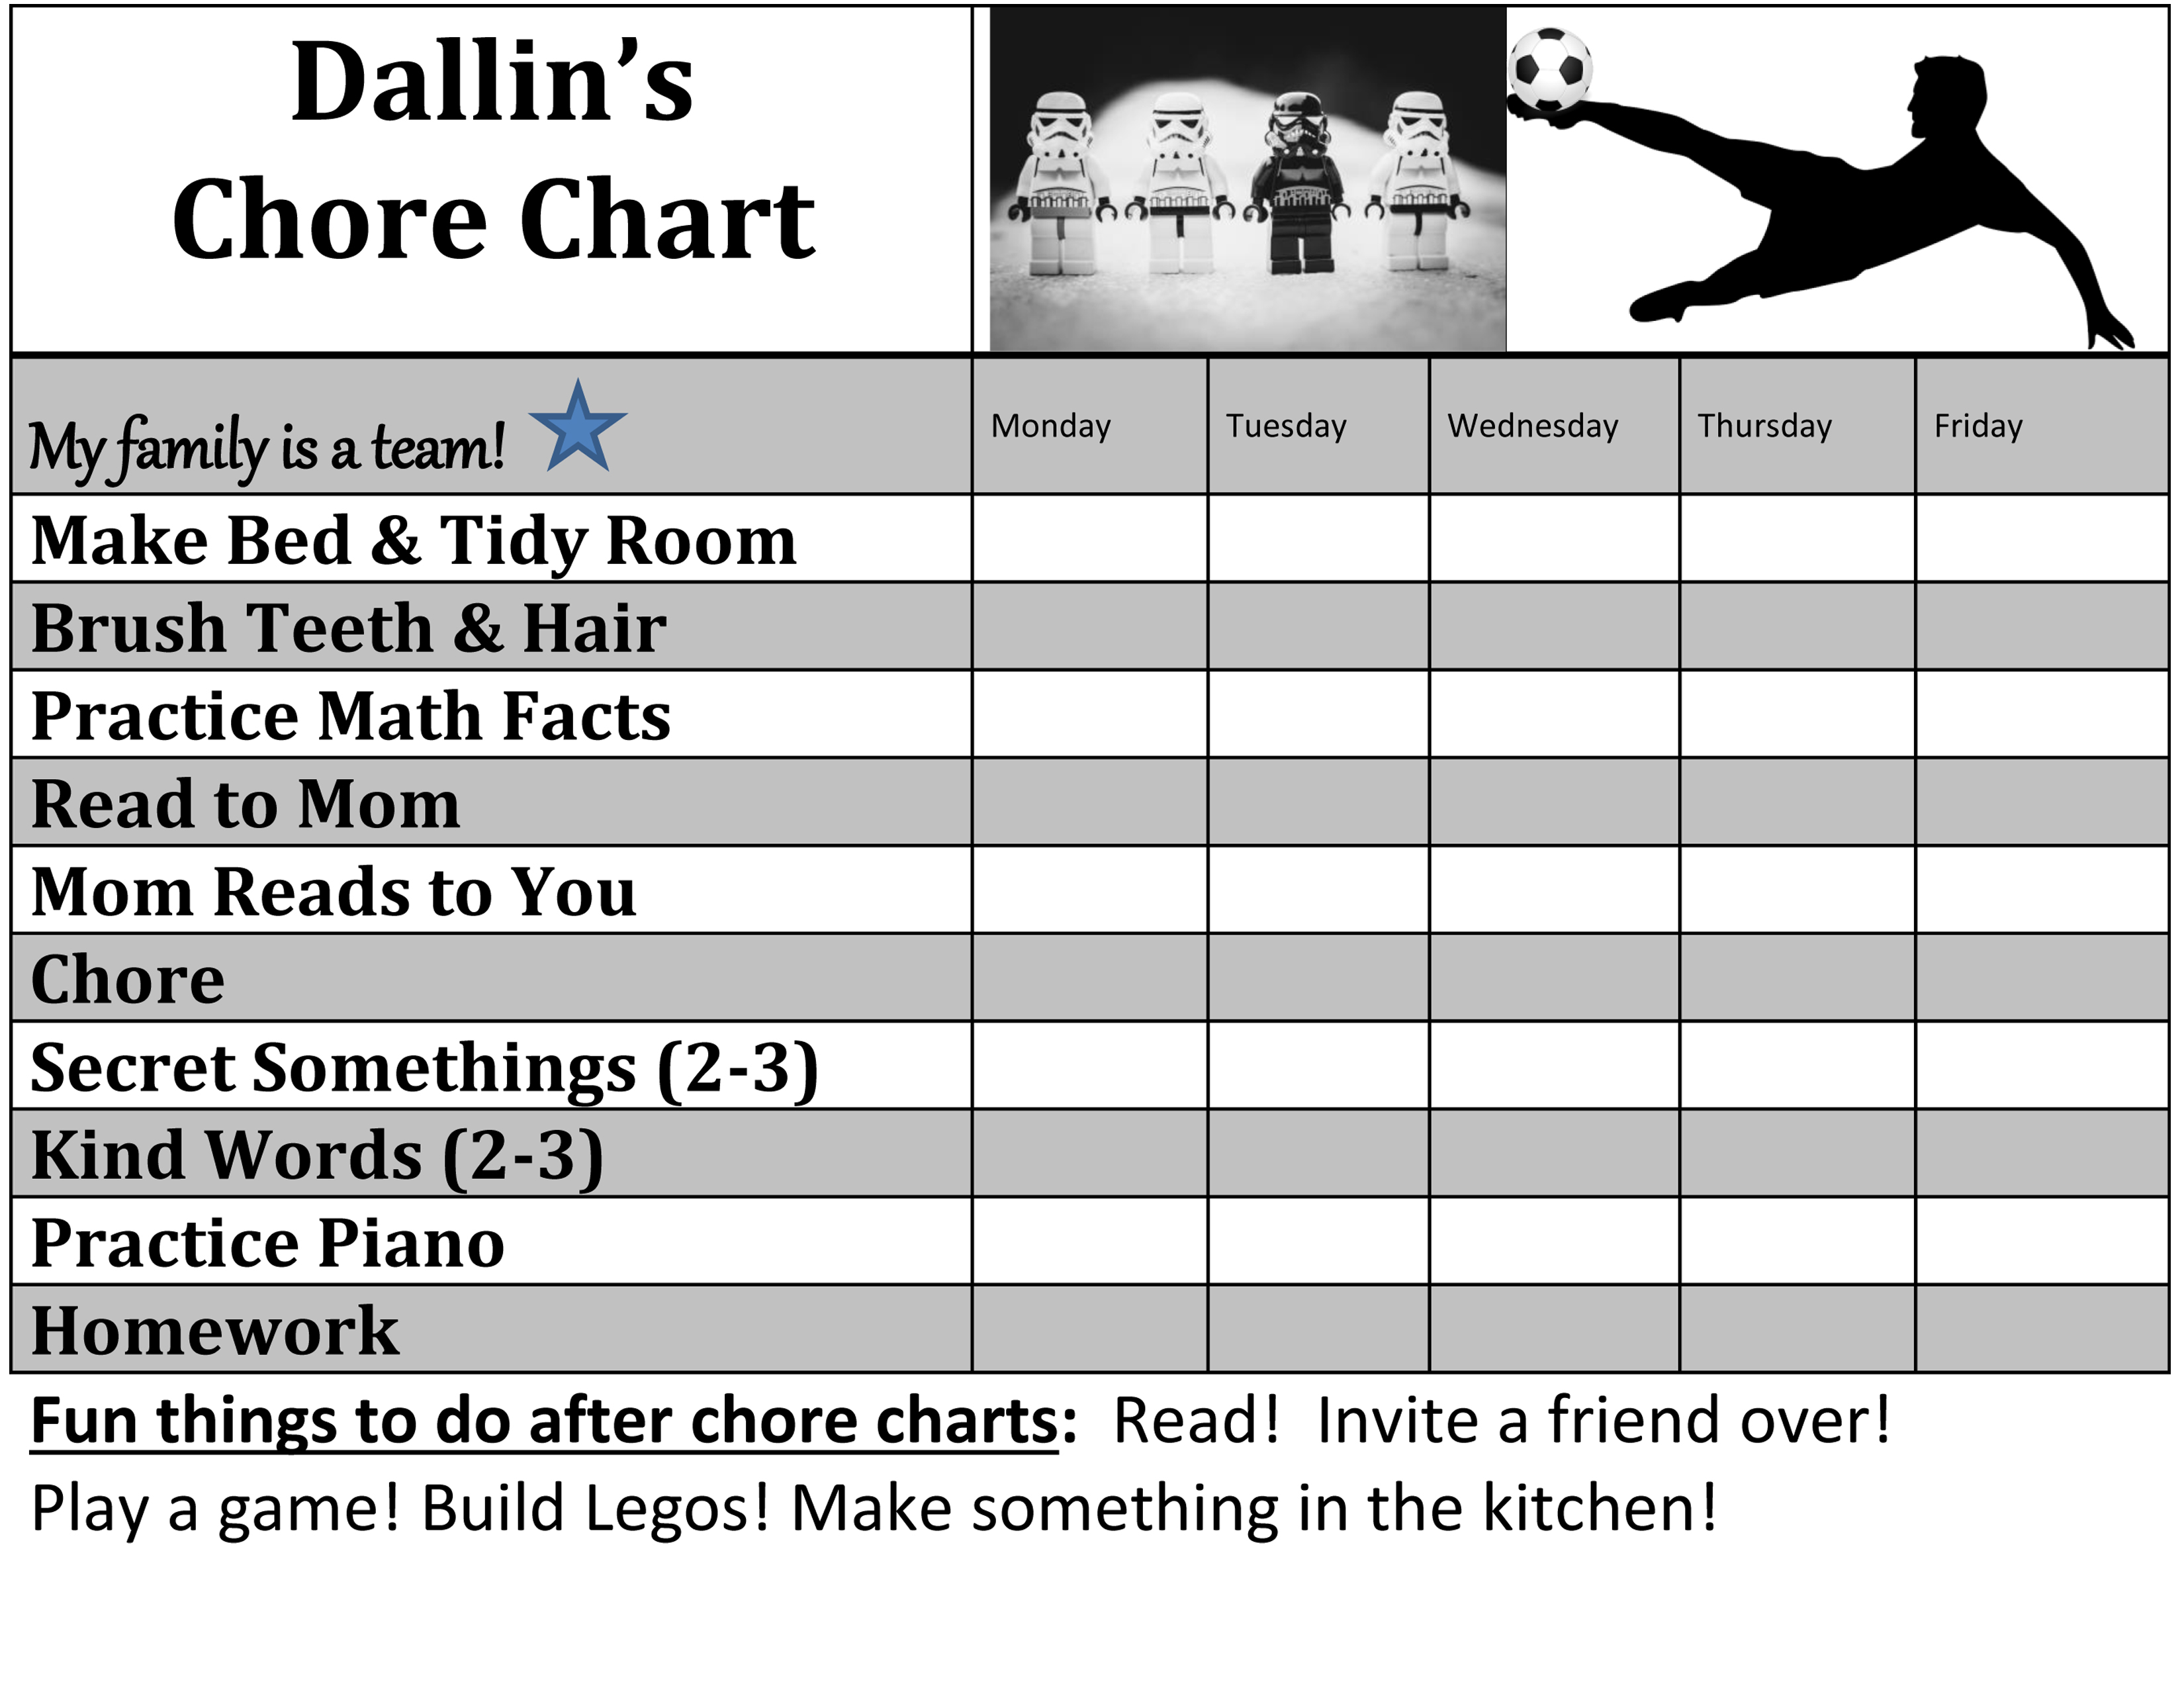 Chore Chart for 5-7 boy